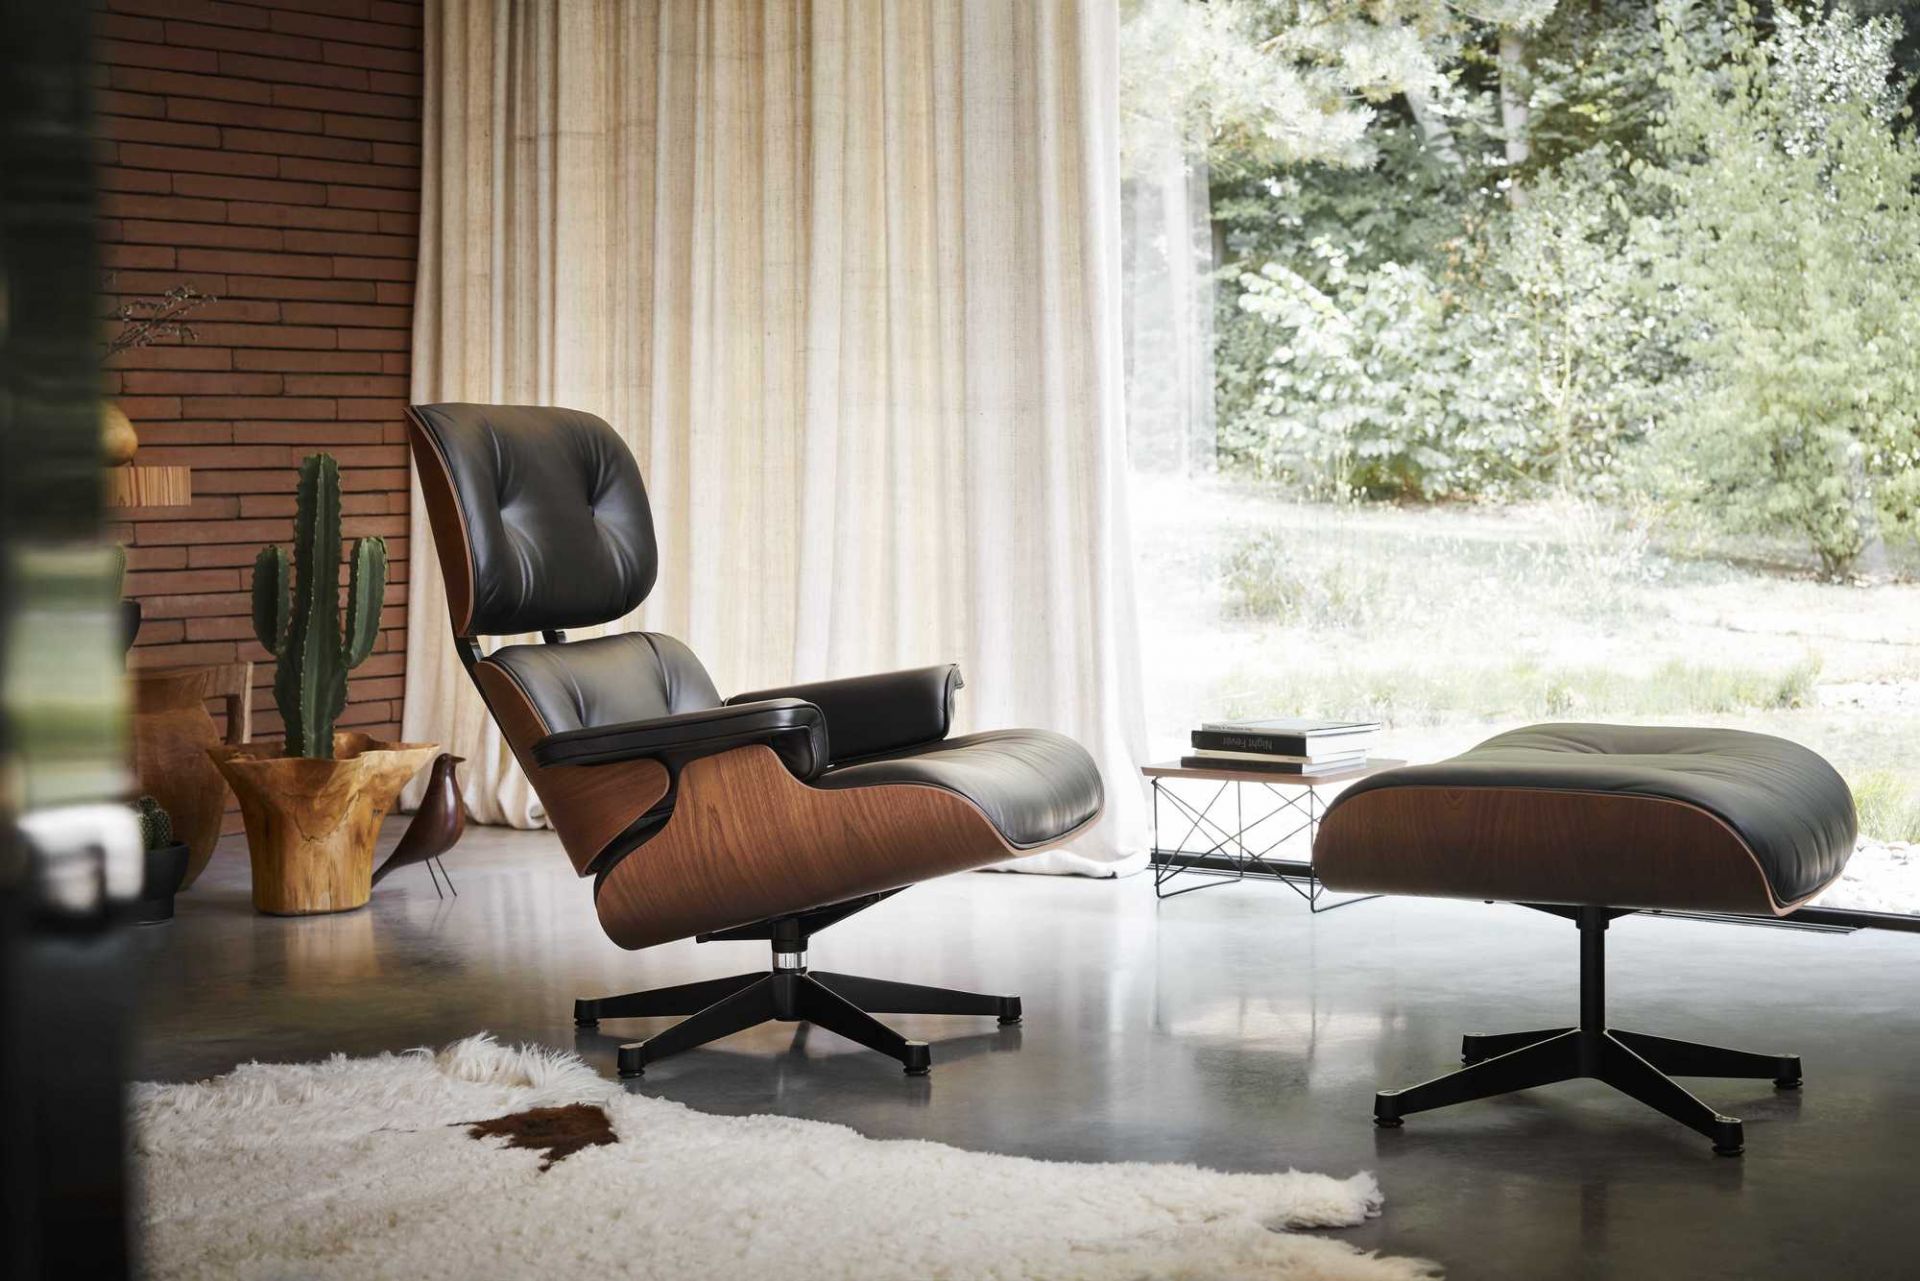 Eames Lounge Chair & Ottoman Fauteuil Cuir Premium Vitra Côtés polis noir  Cuir Premium F noir Cerise | VITRA 412133 2 0075 66 02 05